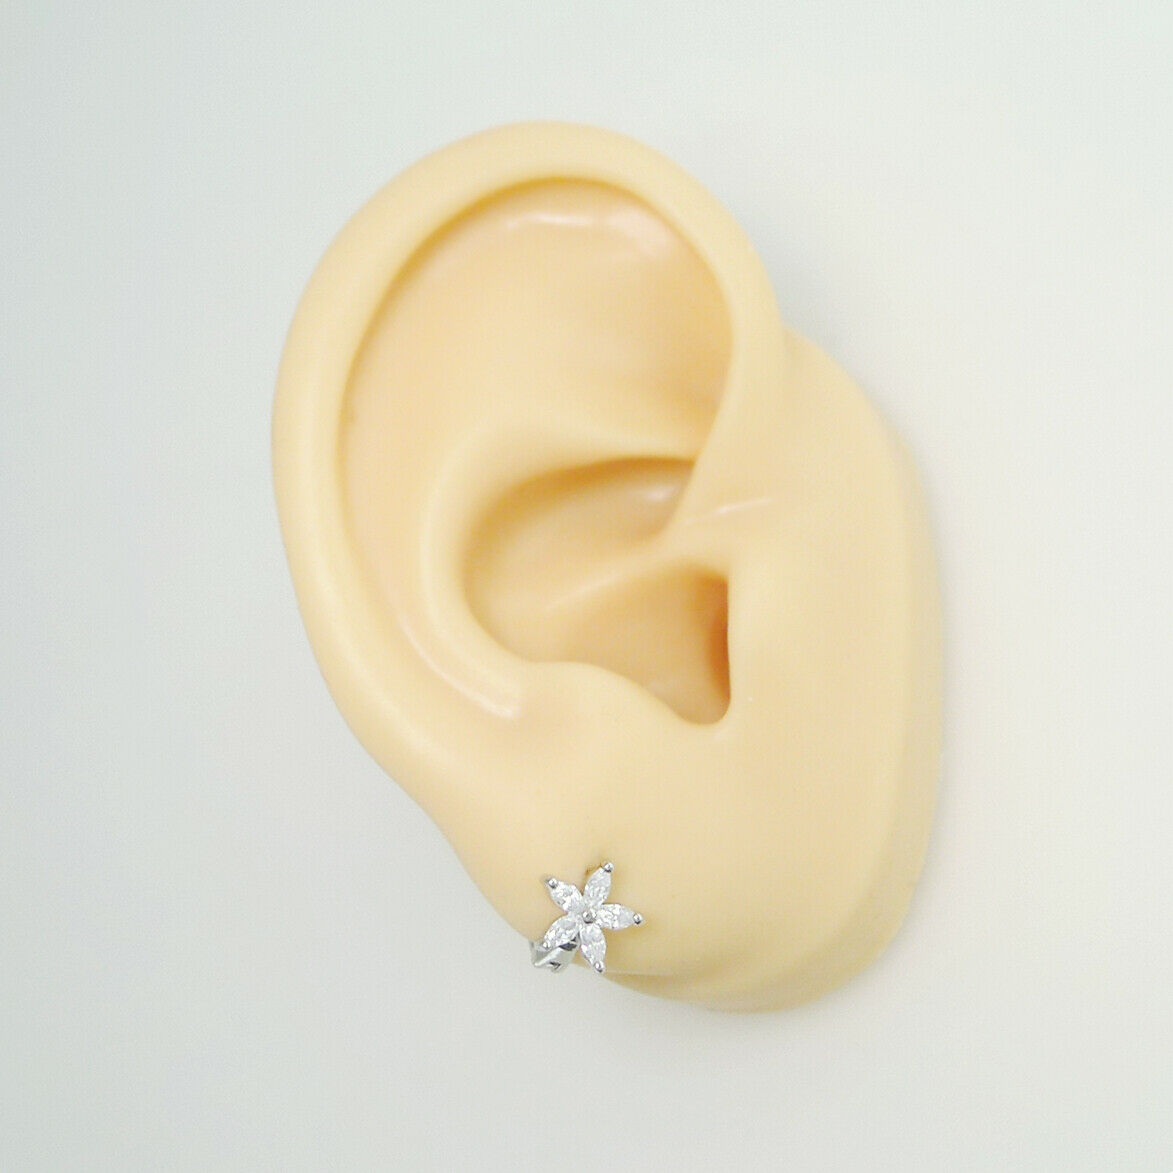 925 Sterling Silver Flower Huggie Hoop Earrings with CZ Accents 2 Tones - sugarkittenlondon